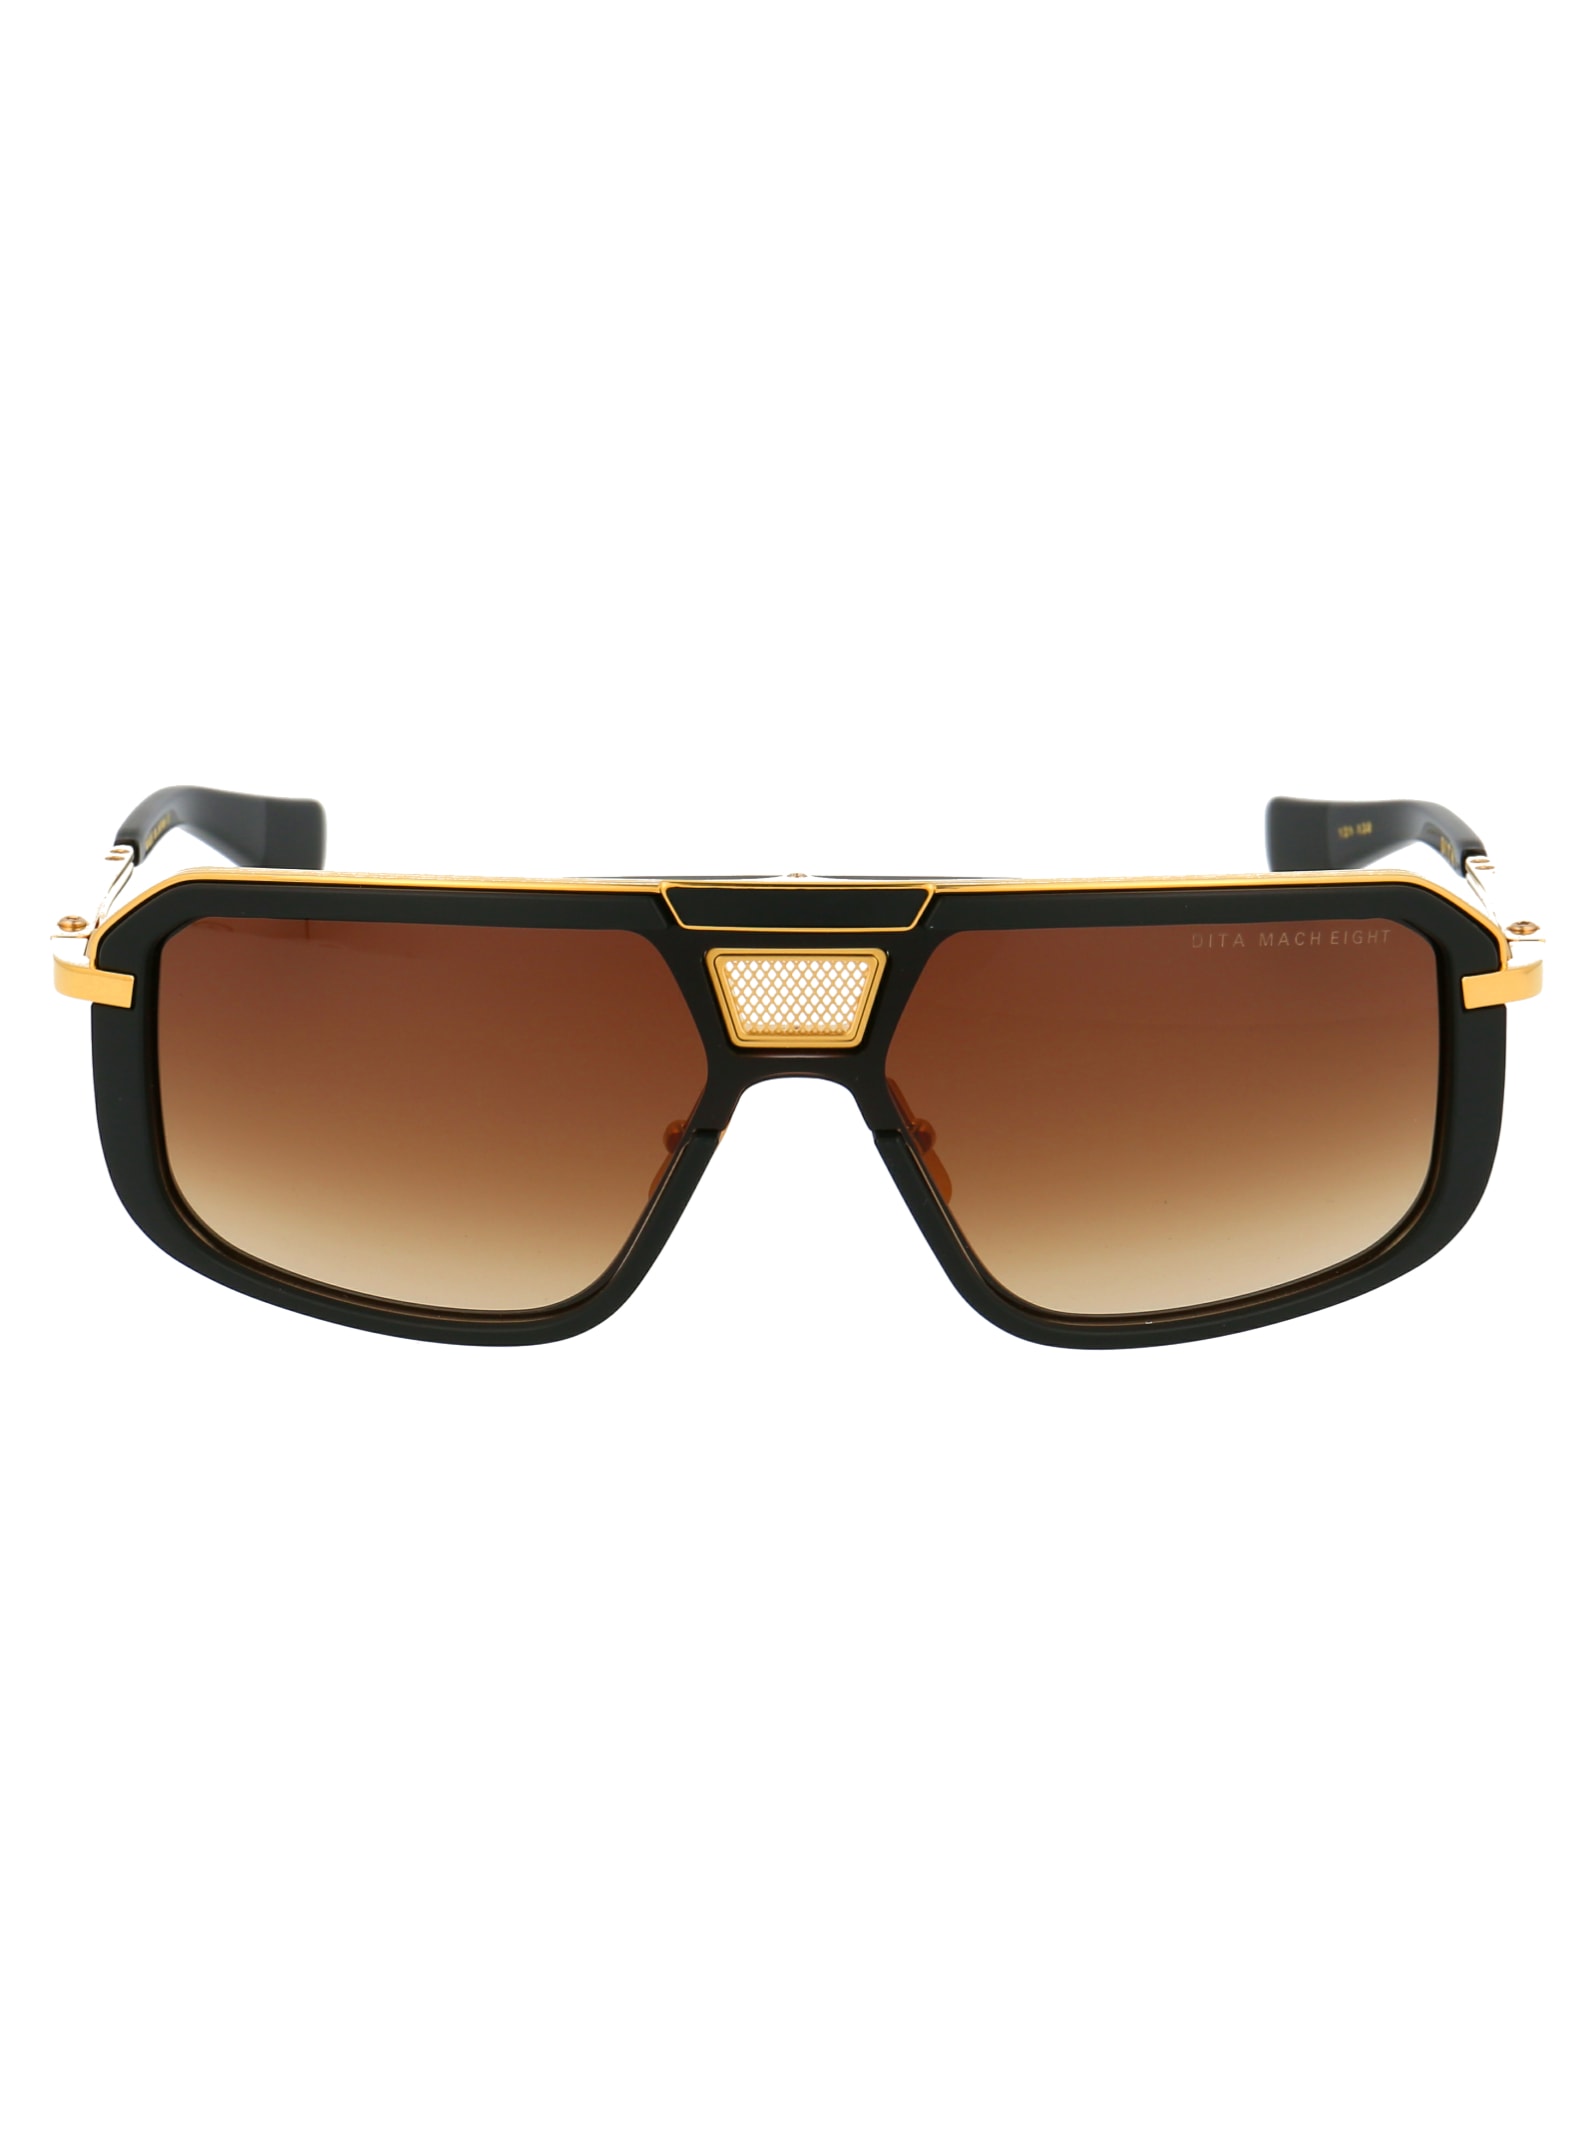 Dita Mach-eight Sunglasses In Matte Black - Yellow Gold